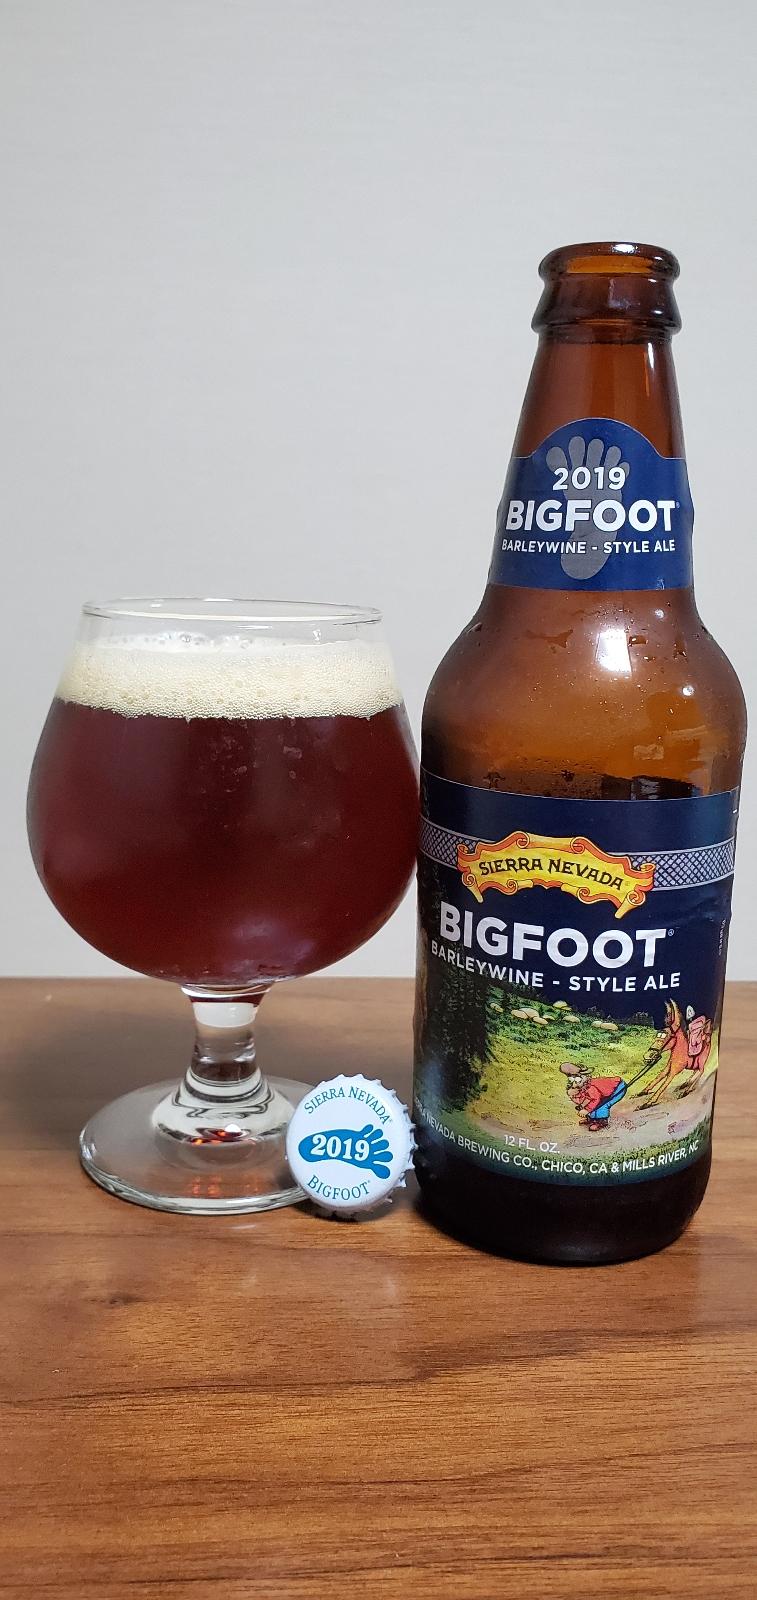 Bigfoot (2019)